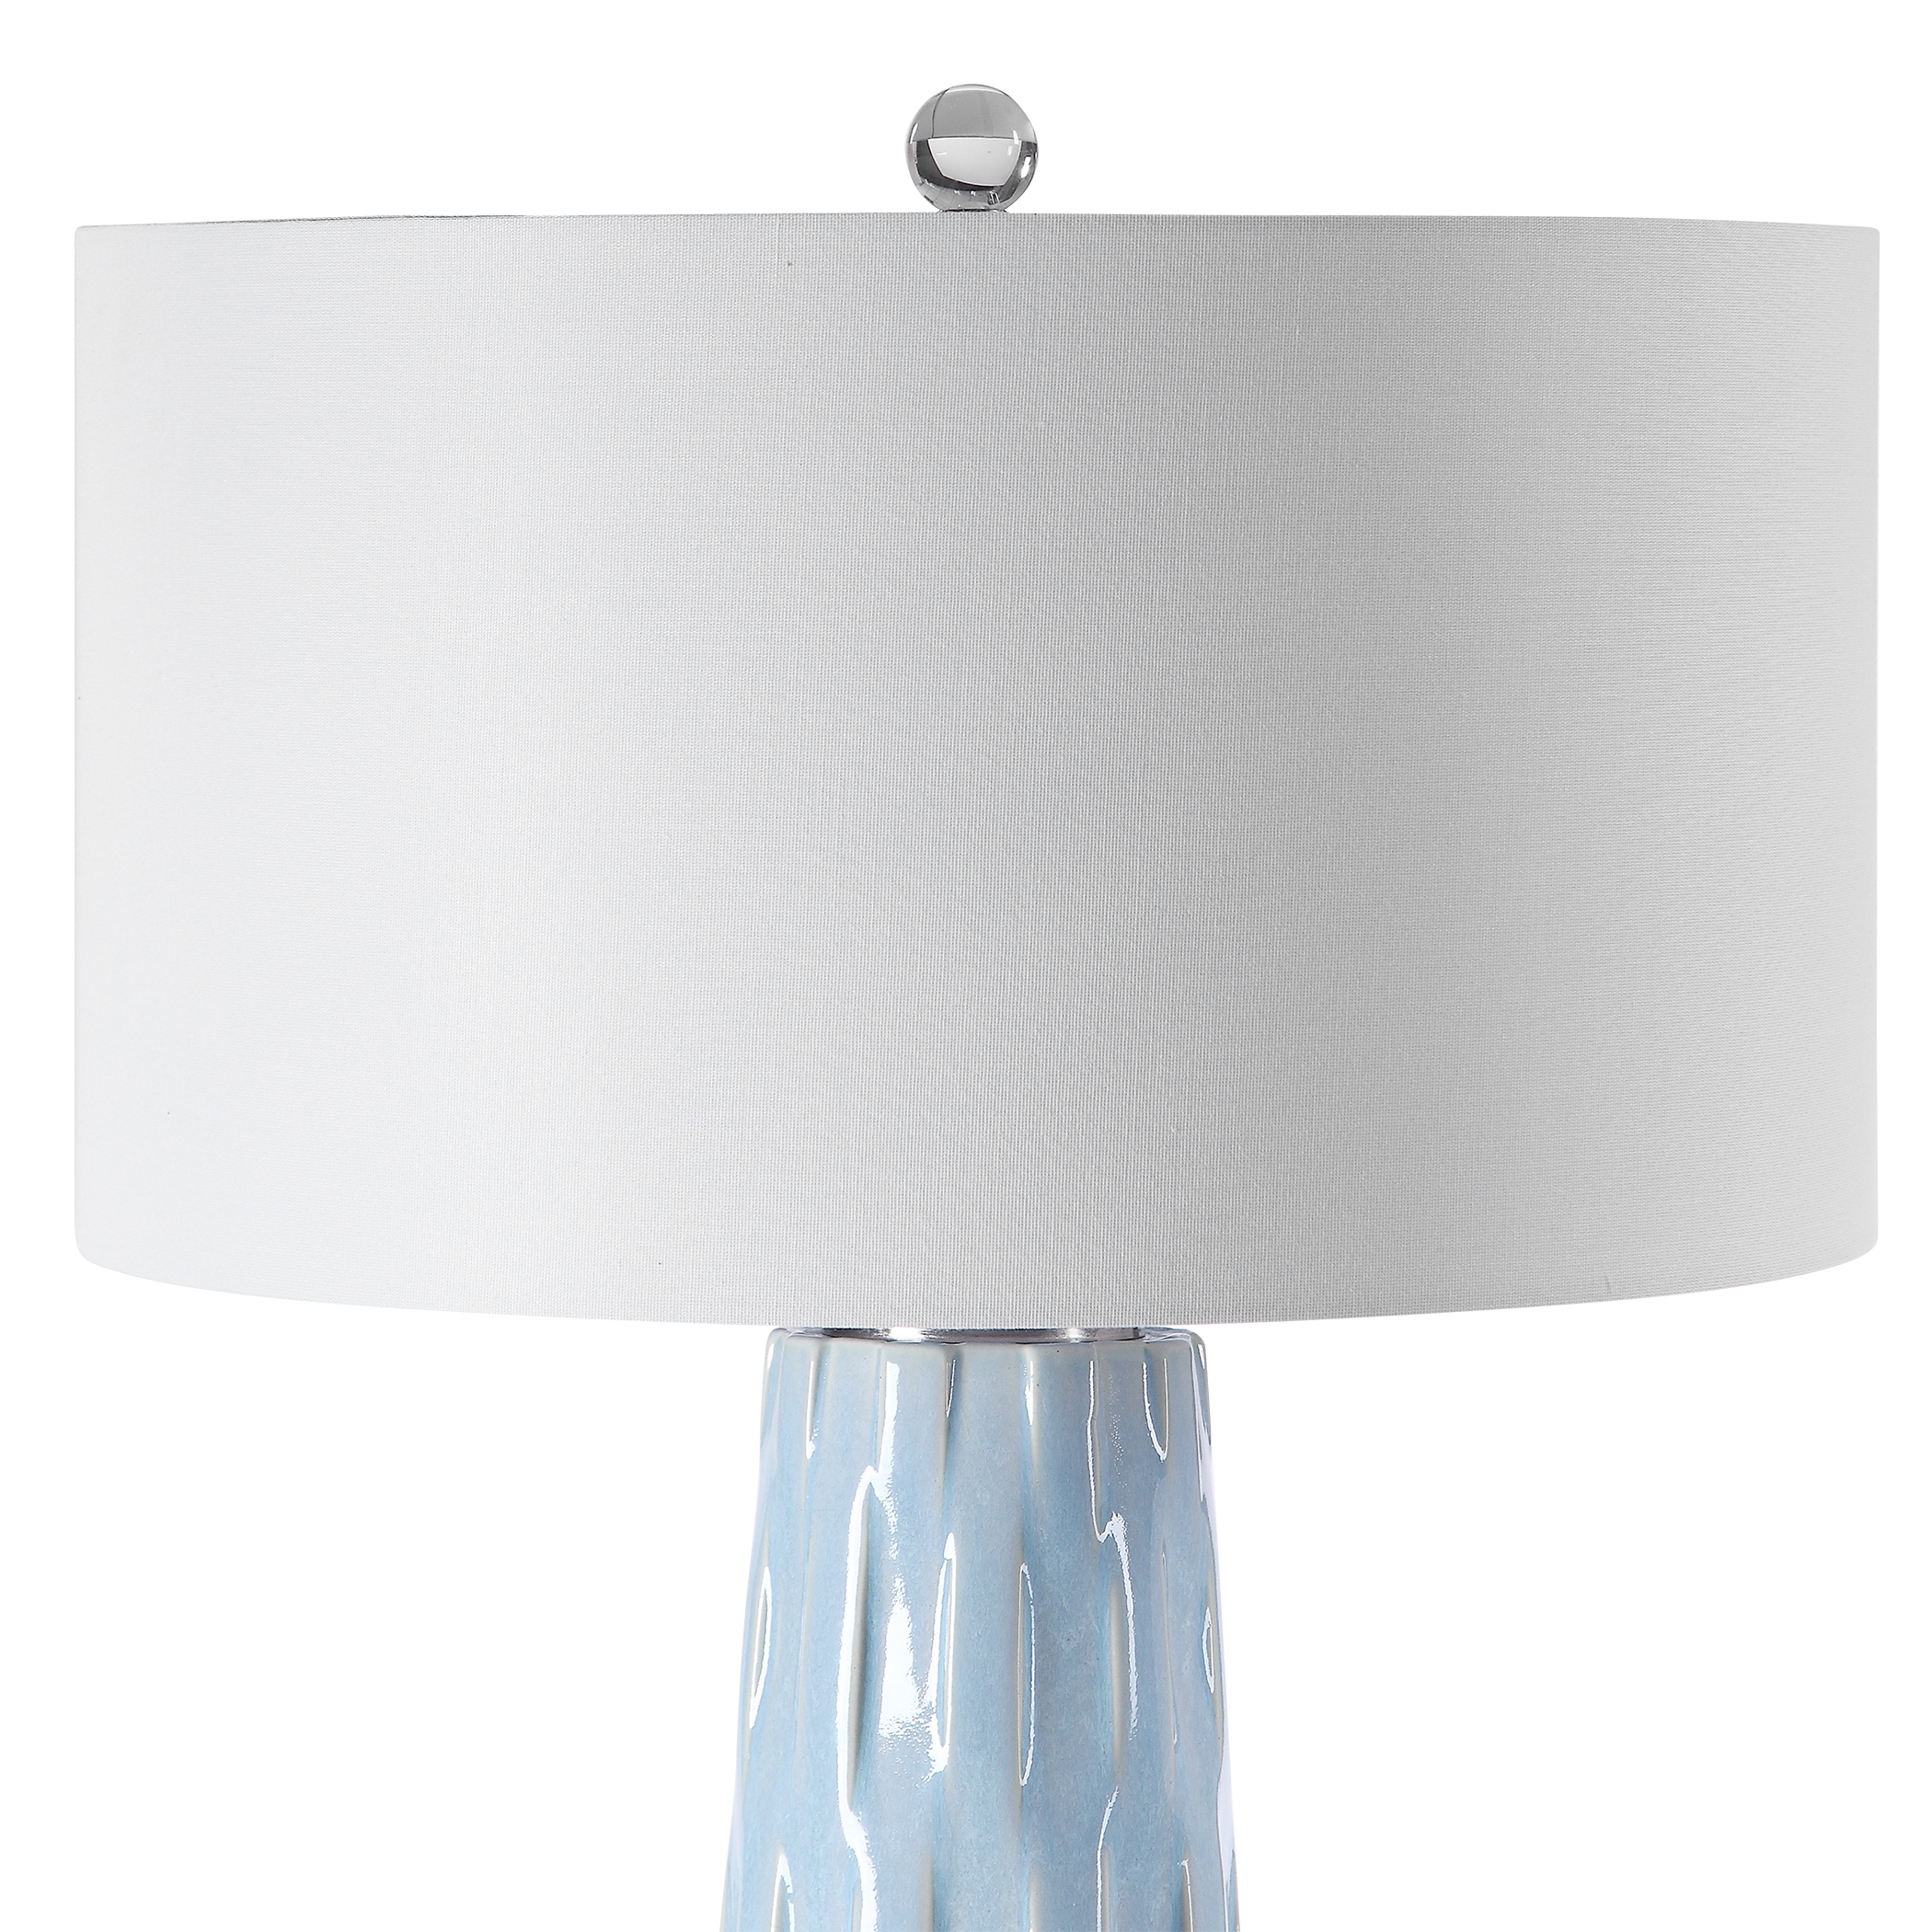 Brienne Light Blue Table Lamp - Image 3